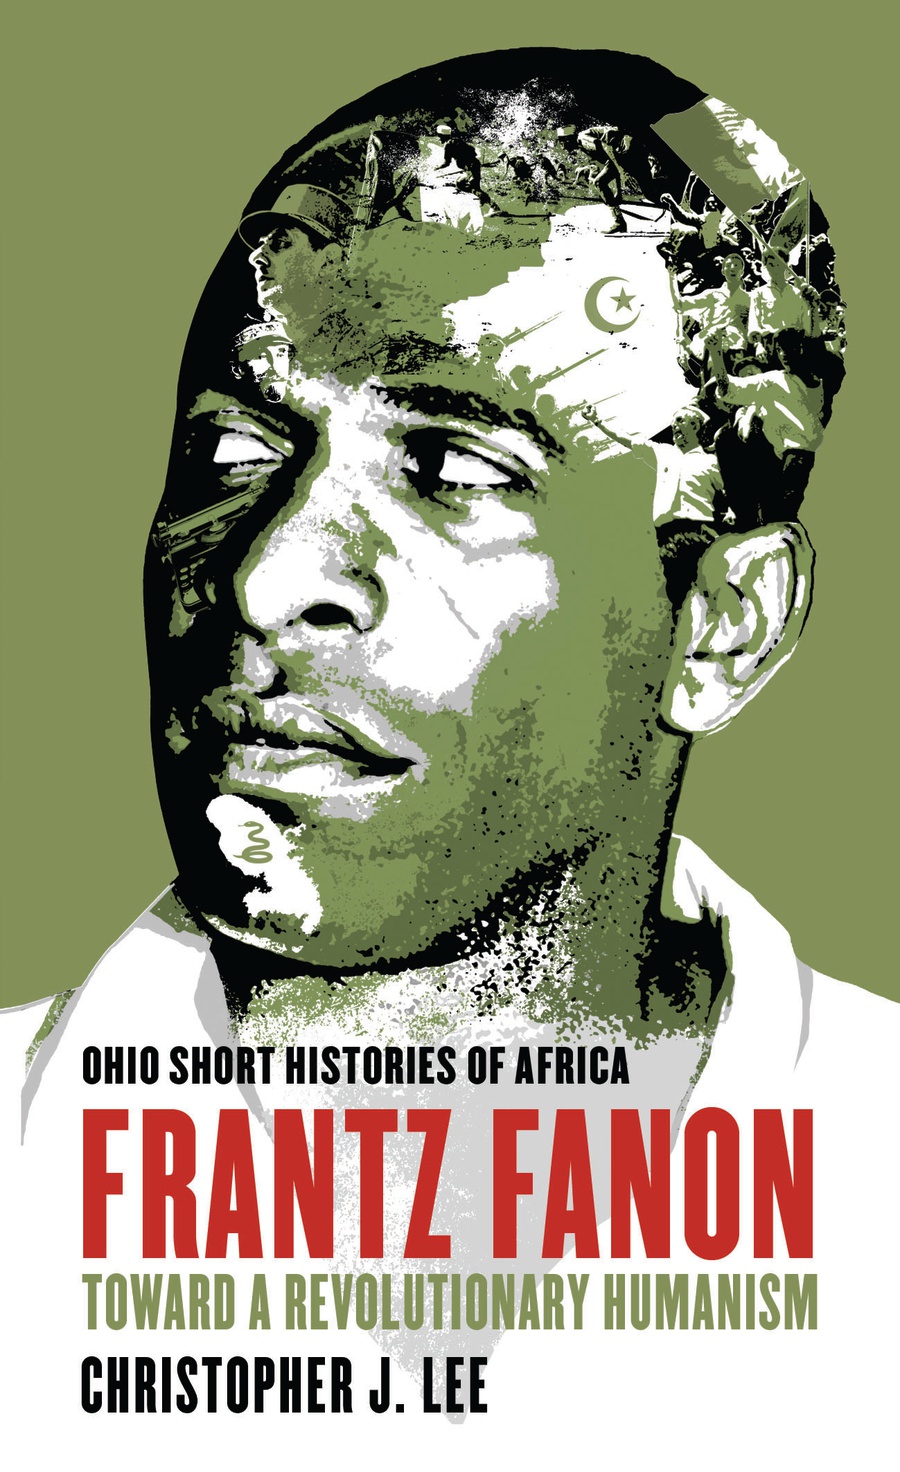 Christopher J. Lee: Frantz Fanon (2015, Ohio University Press)